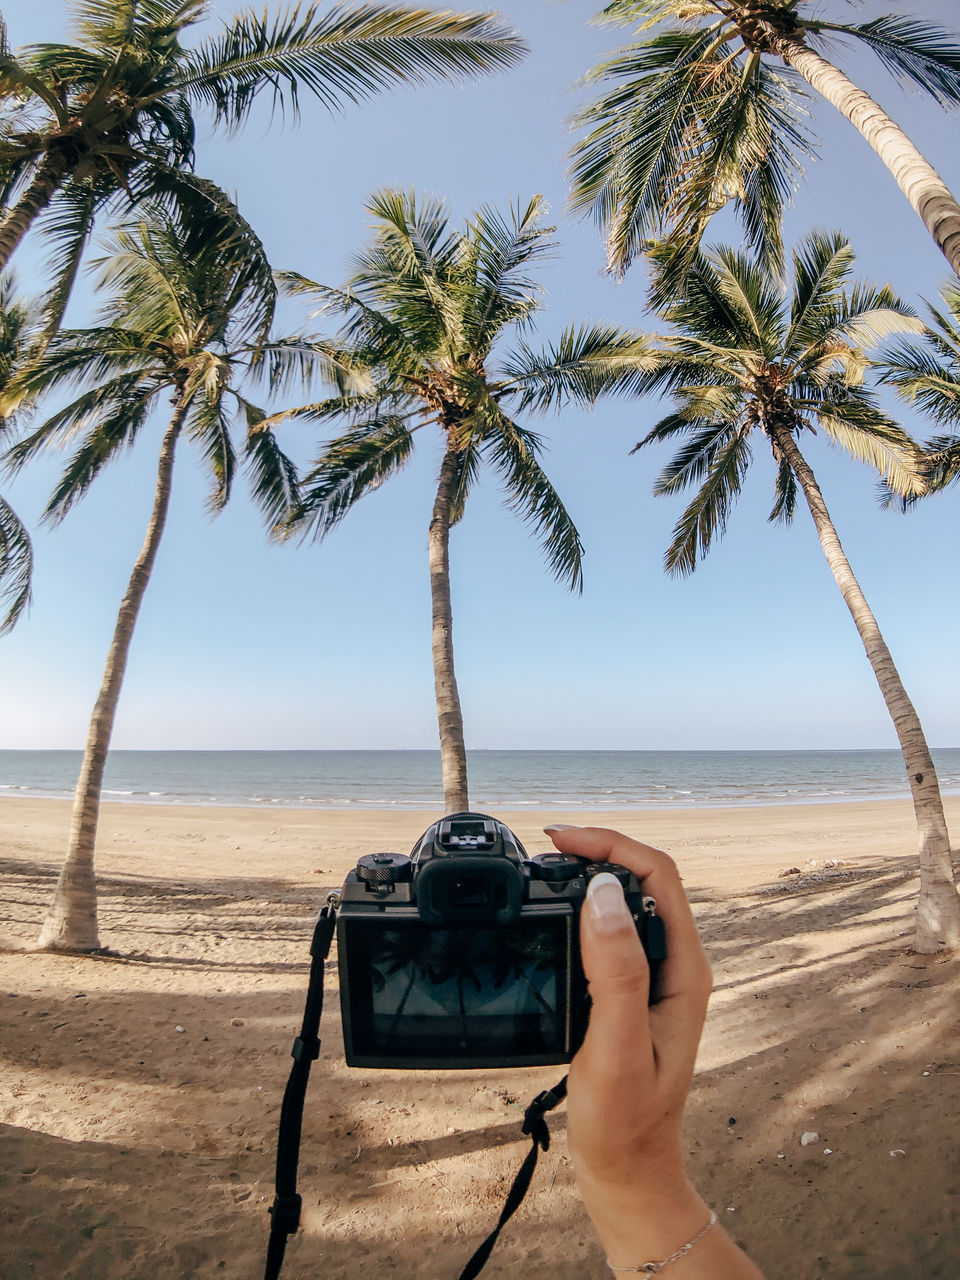 MAN PHOTOGRAPHING PALM TREE ON BEACH